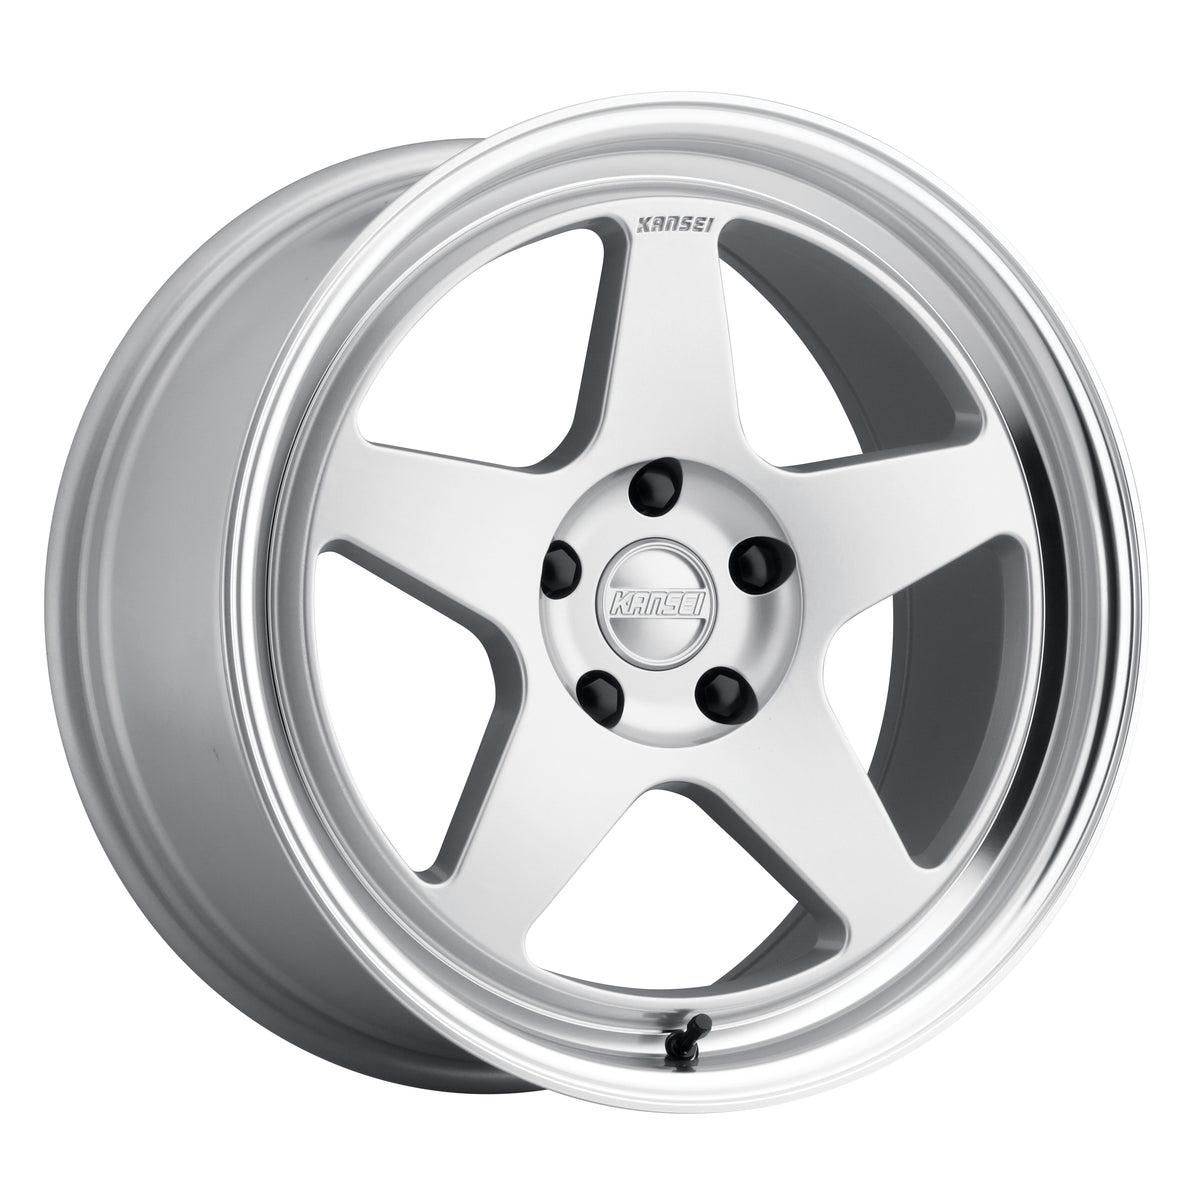 K12H KNP Wheel, Size: 19" x 9.50", Bolt Pattern: 5 x 120 mm, Backspace: 6.12" [Finish: Hyper Silver]